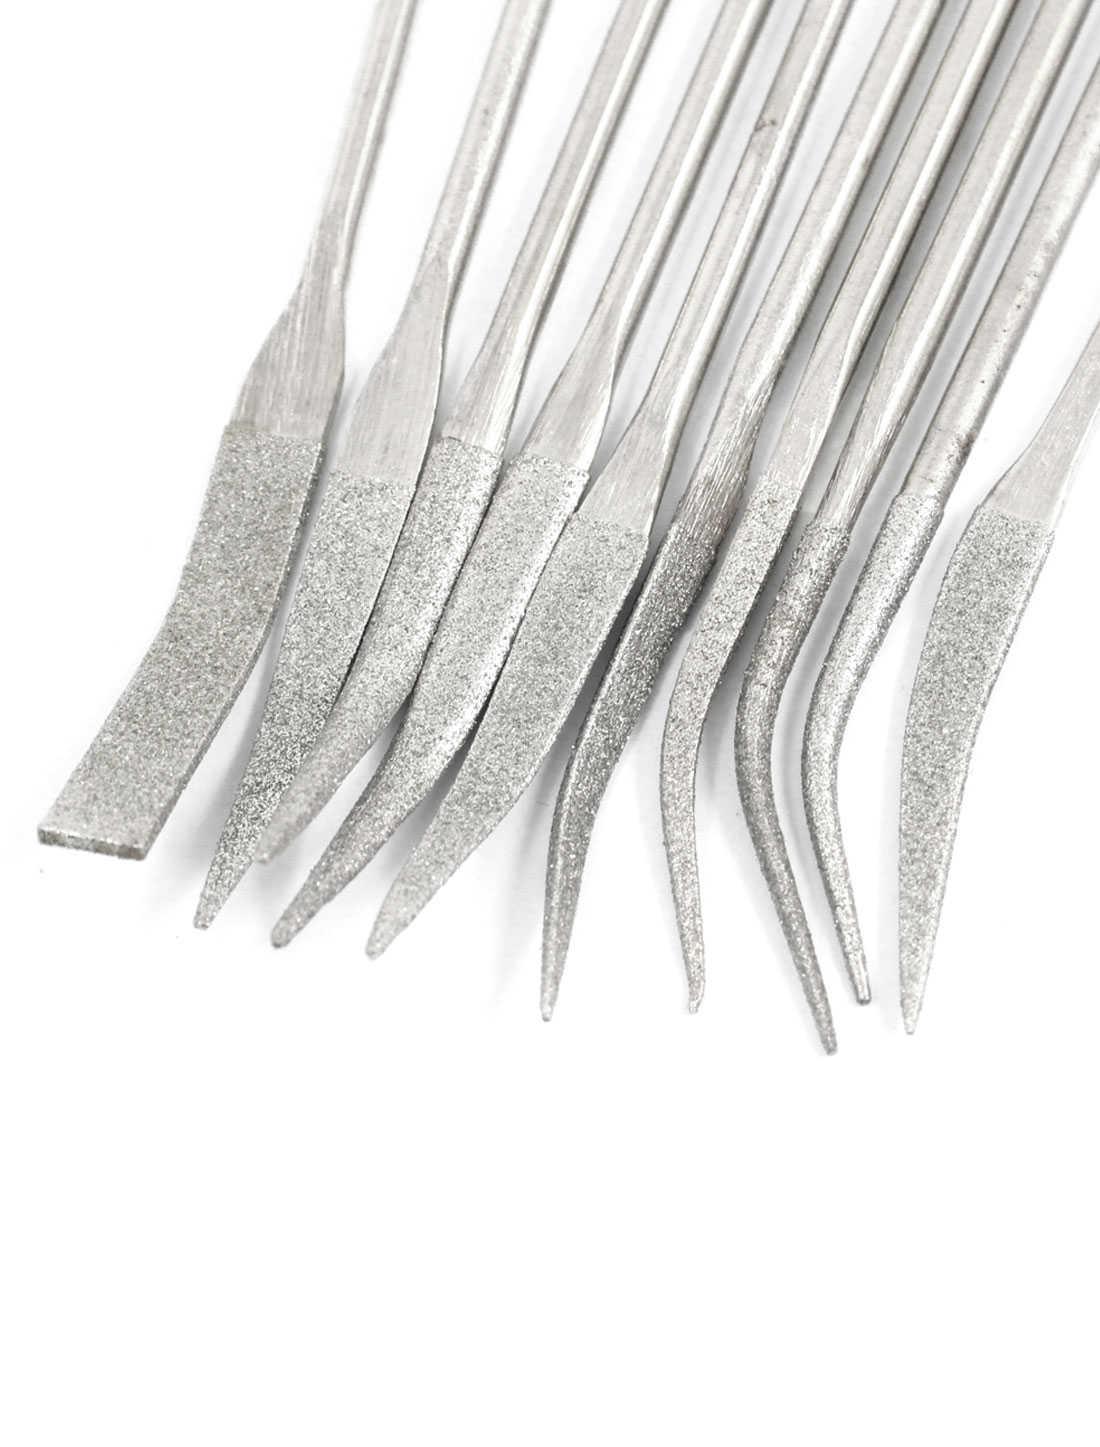 140mm x 3mm Curved Grit Diamond Lapidary Needle Files 10 Pcs